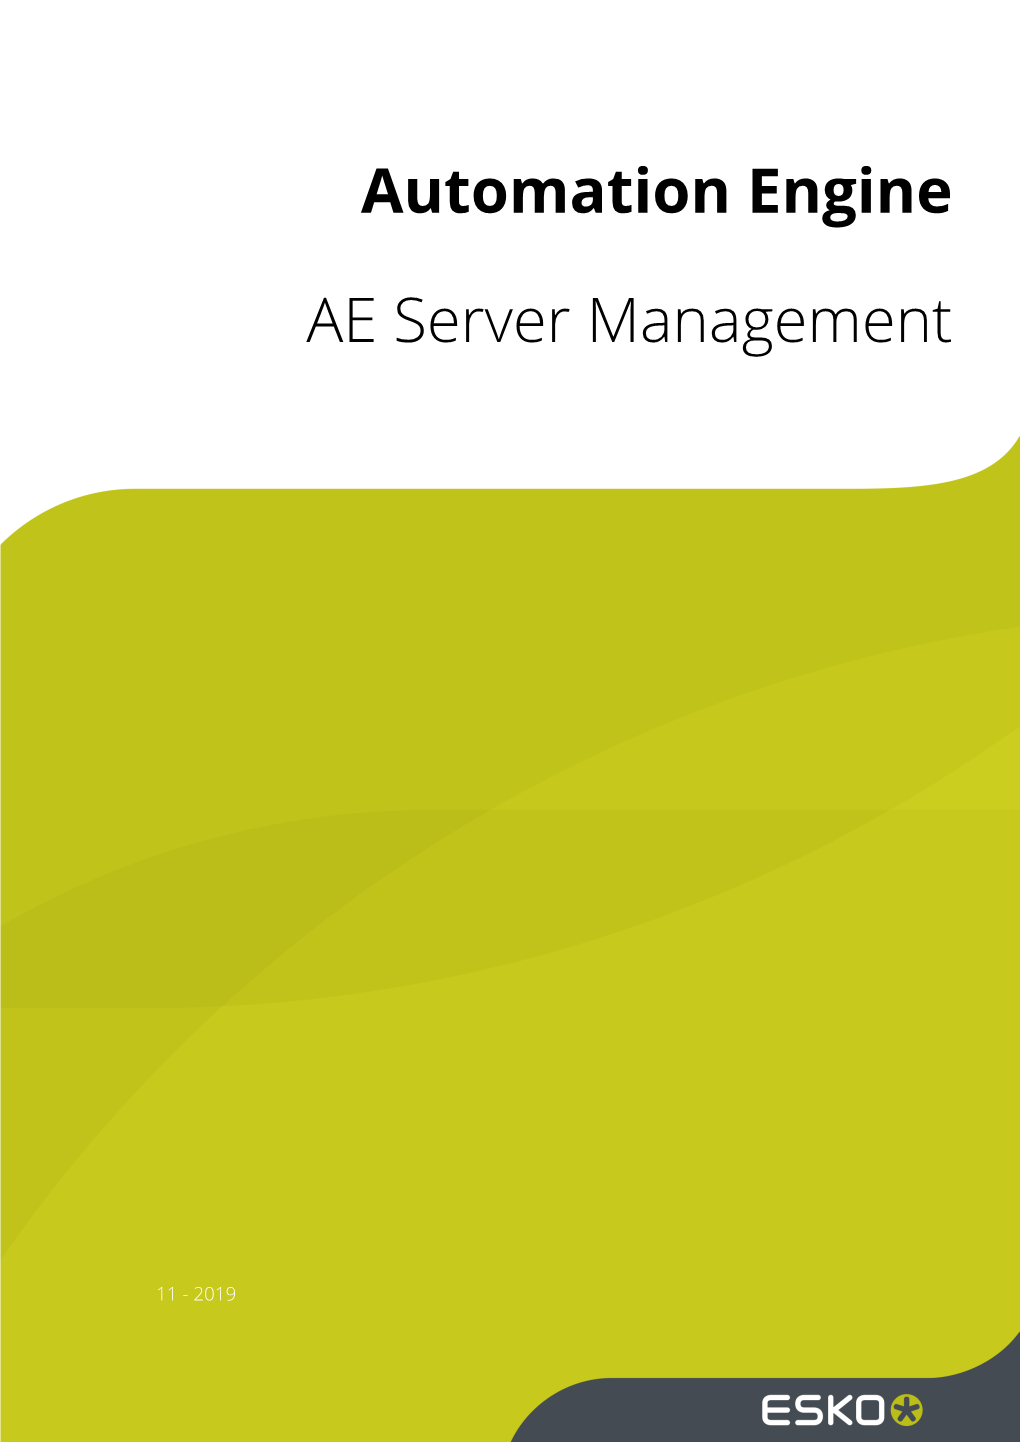 AE Server Management